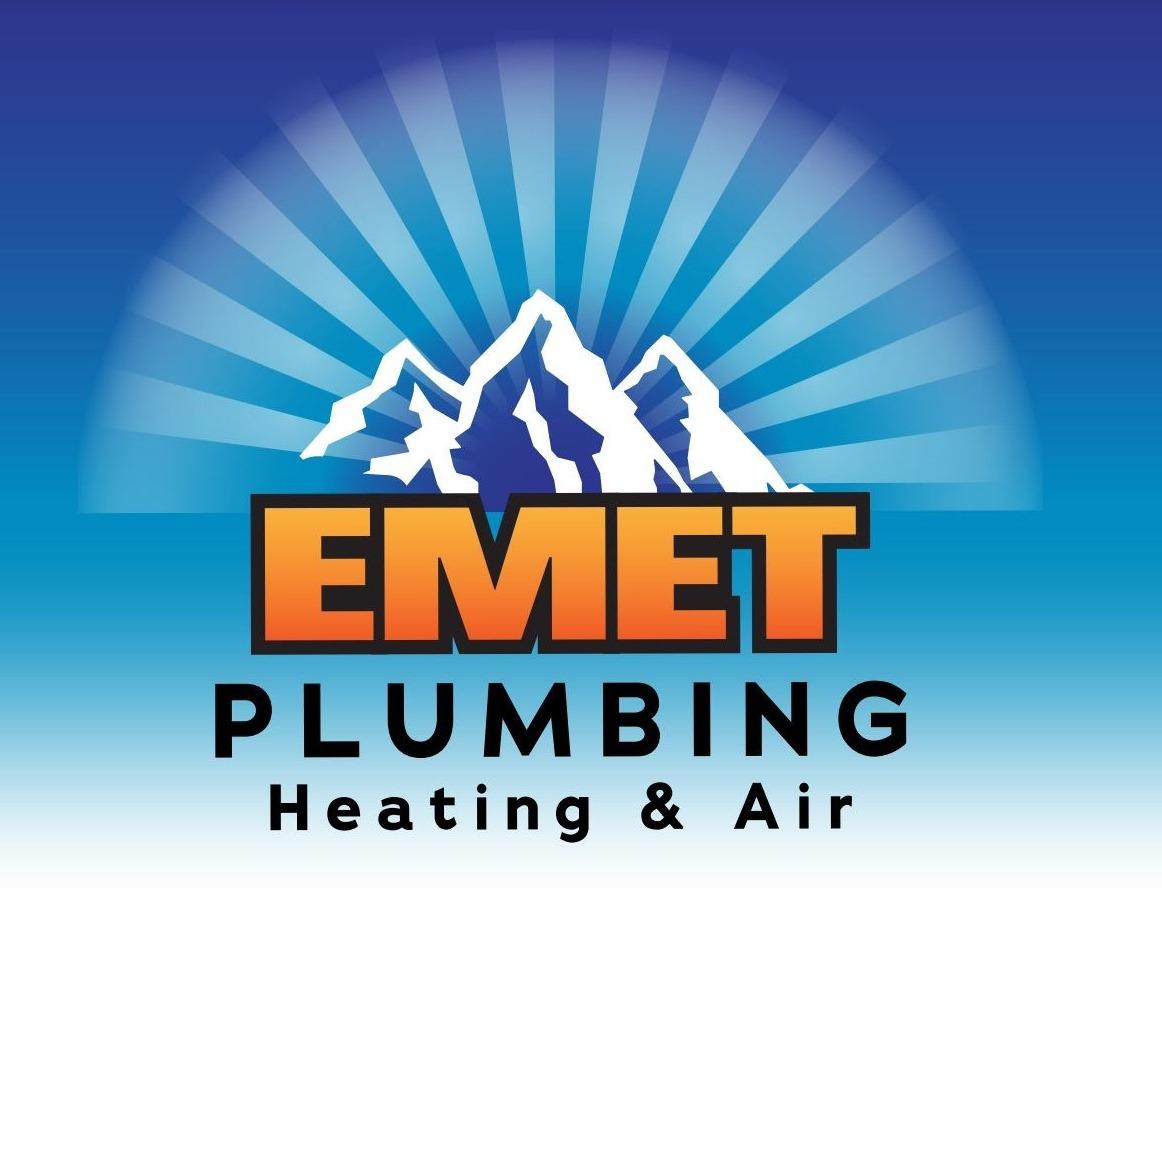 Emet plumbing services - Salt Lake City, UT - (801)433-7354 | ShowMeLocal.com